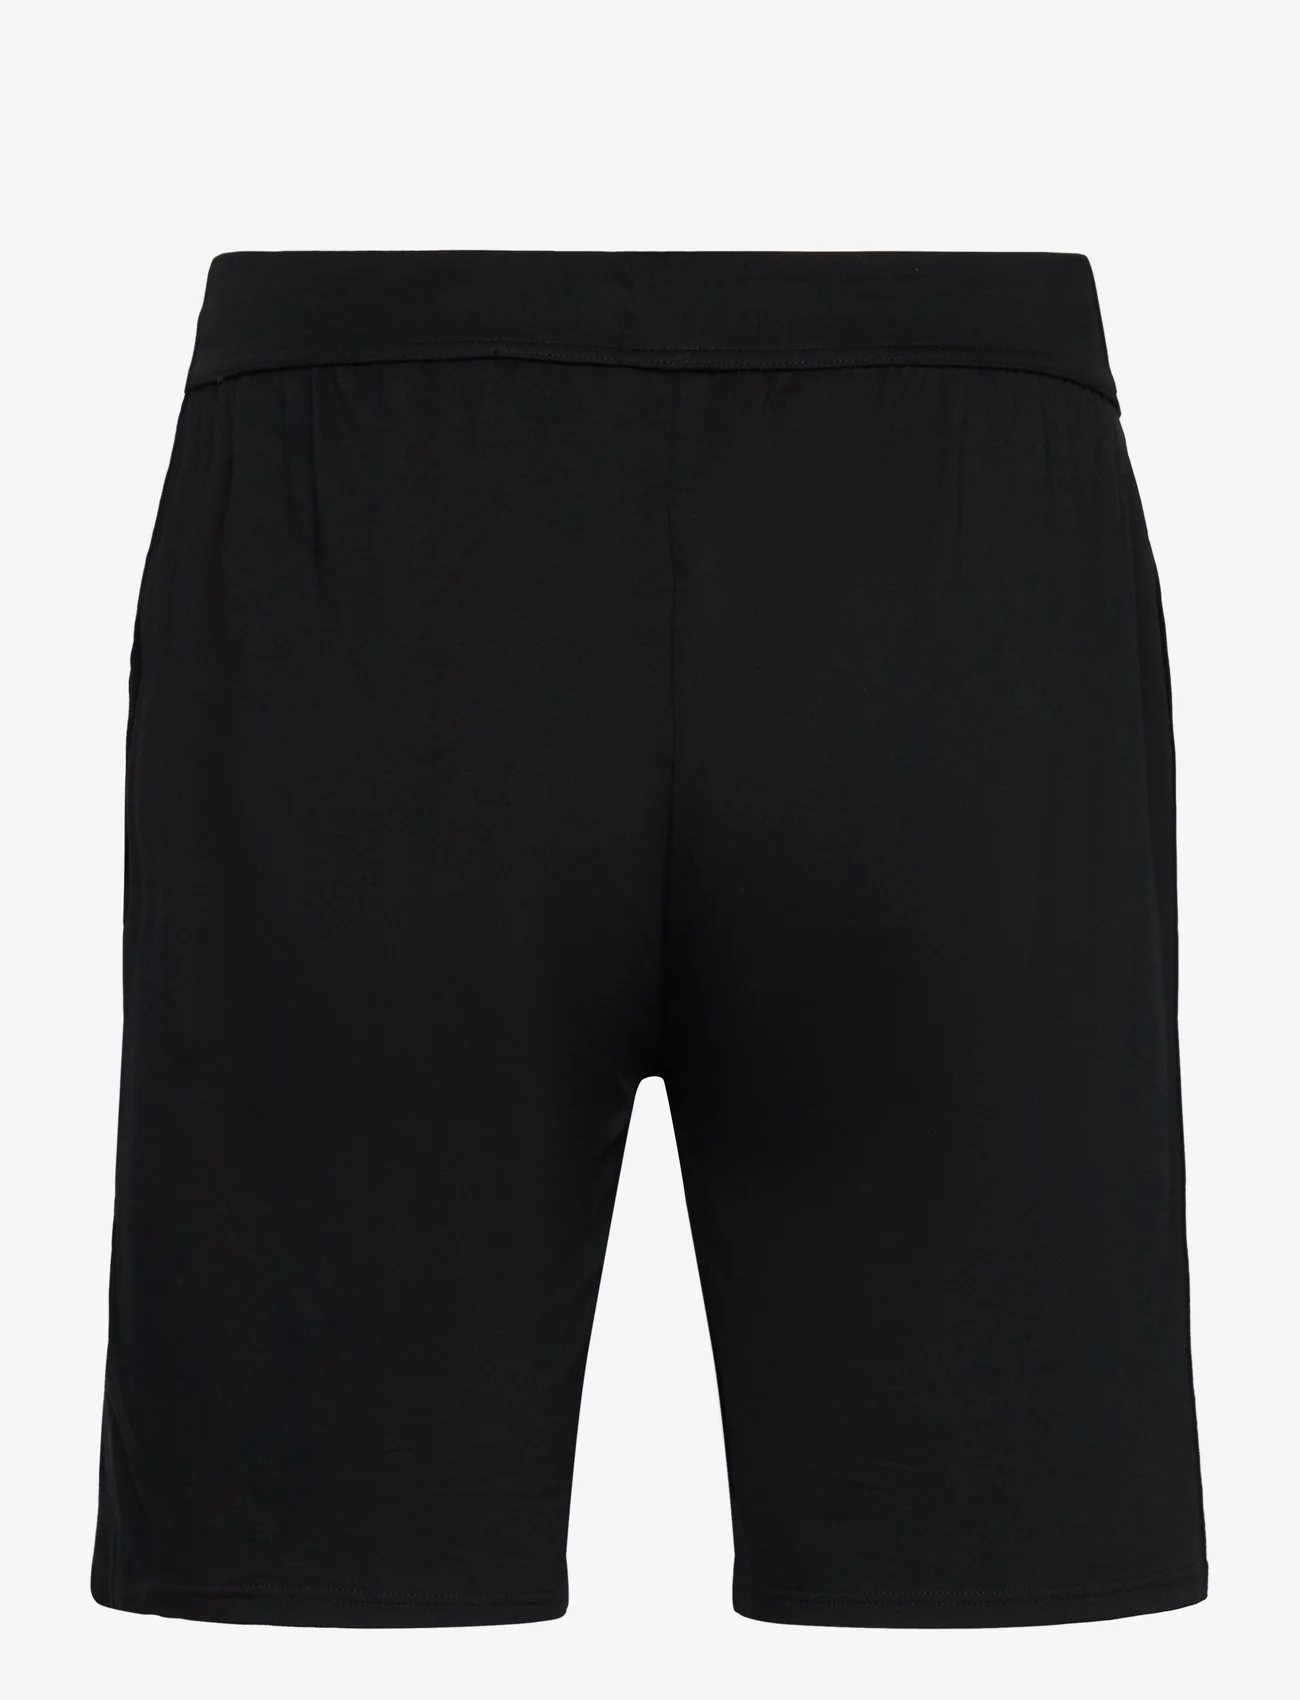 BOSS - Unique Shorts CW - casual shorts - black - 1